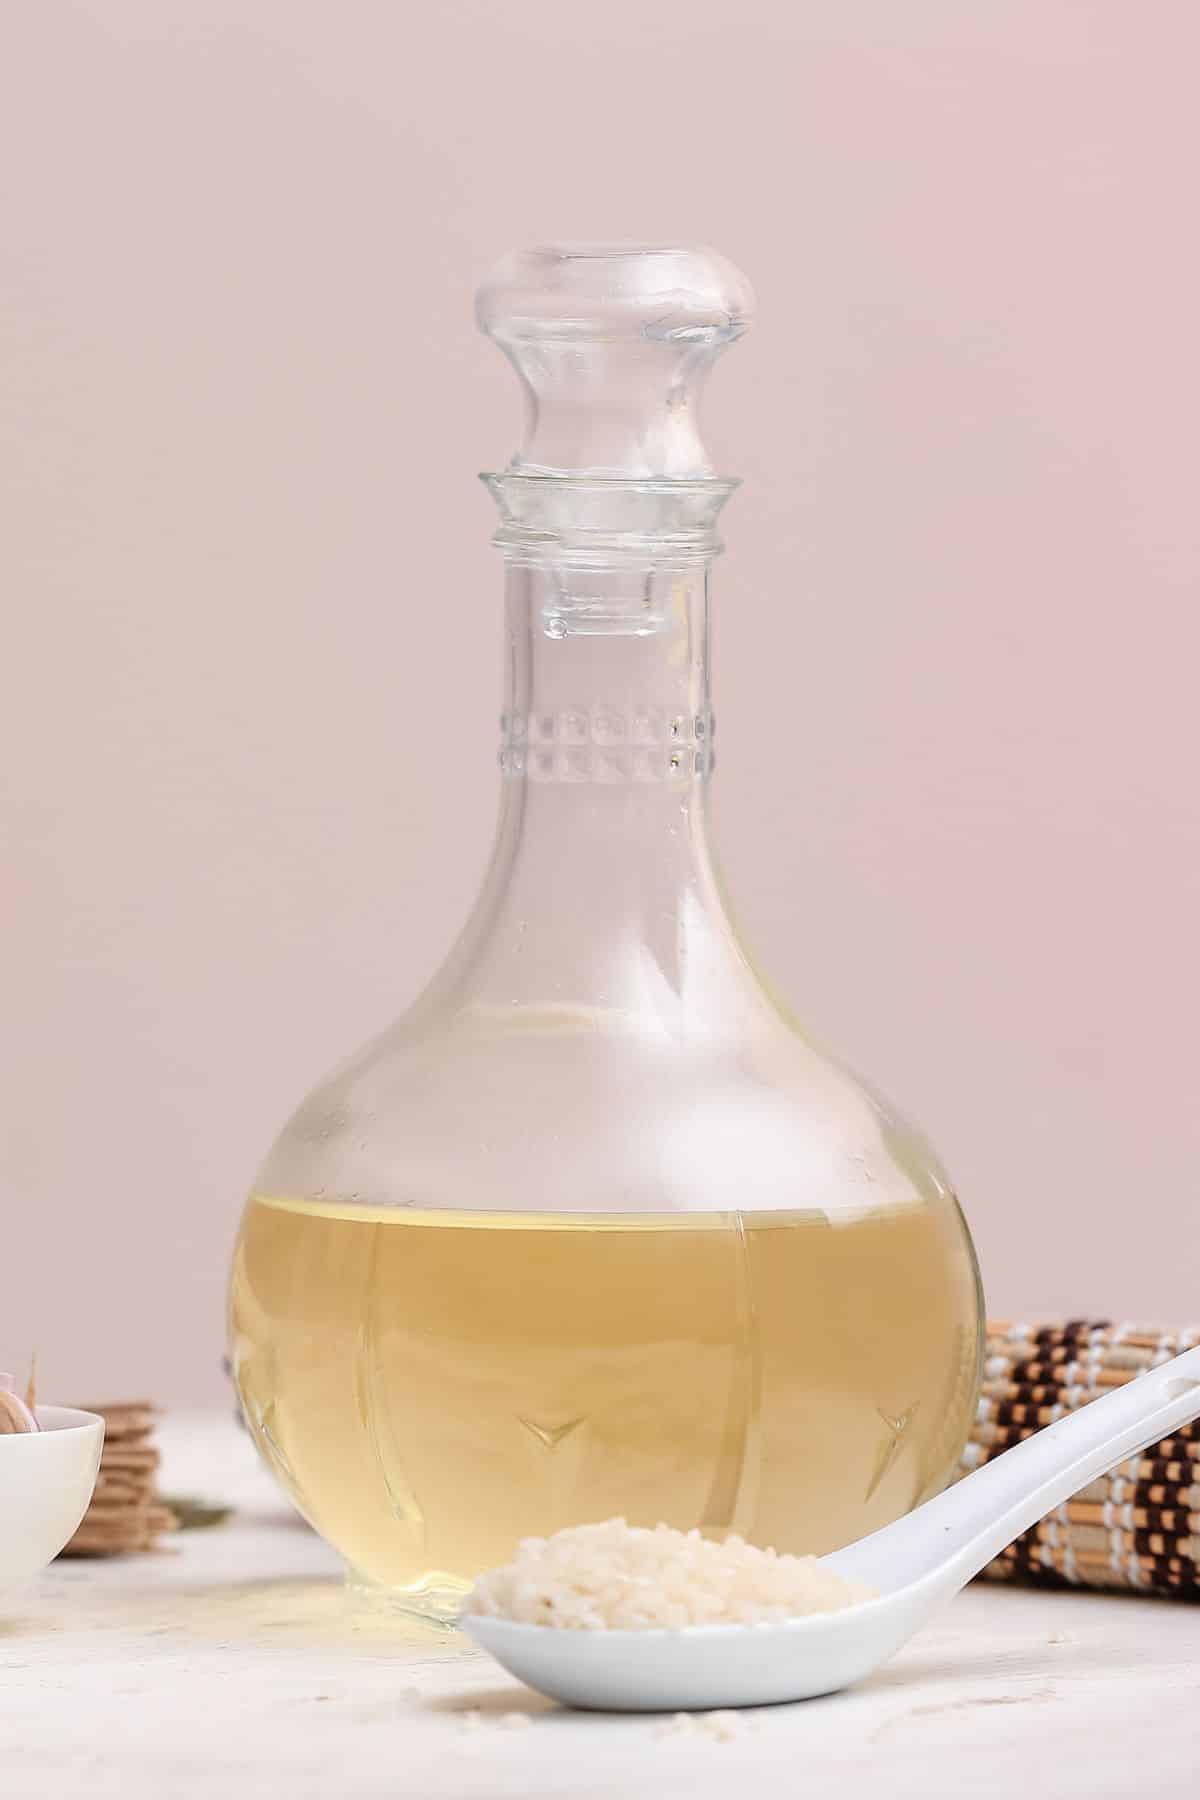 Bottle of rice wine vinegar with scoop of rice.